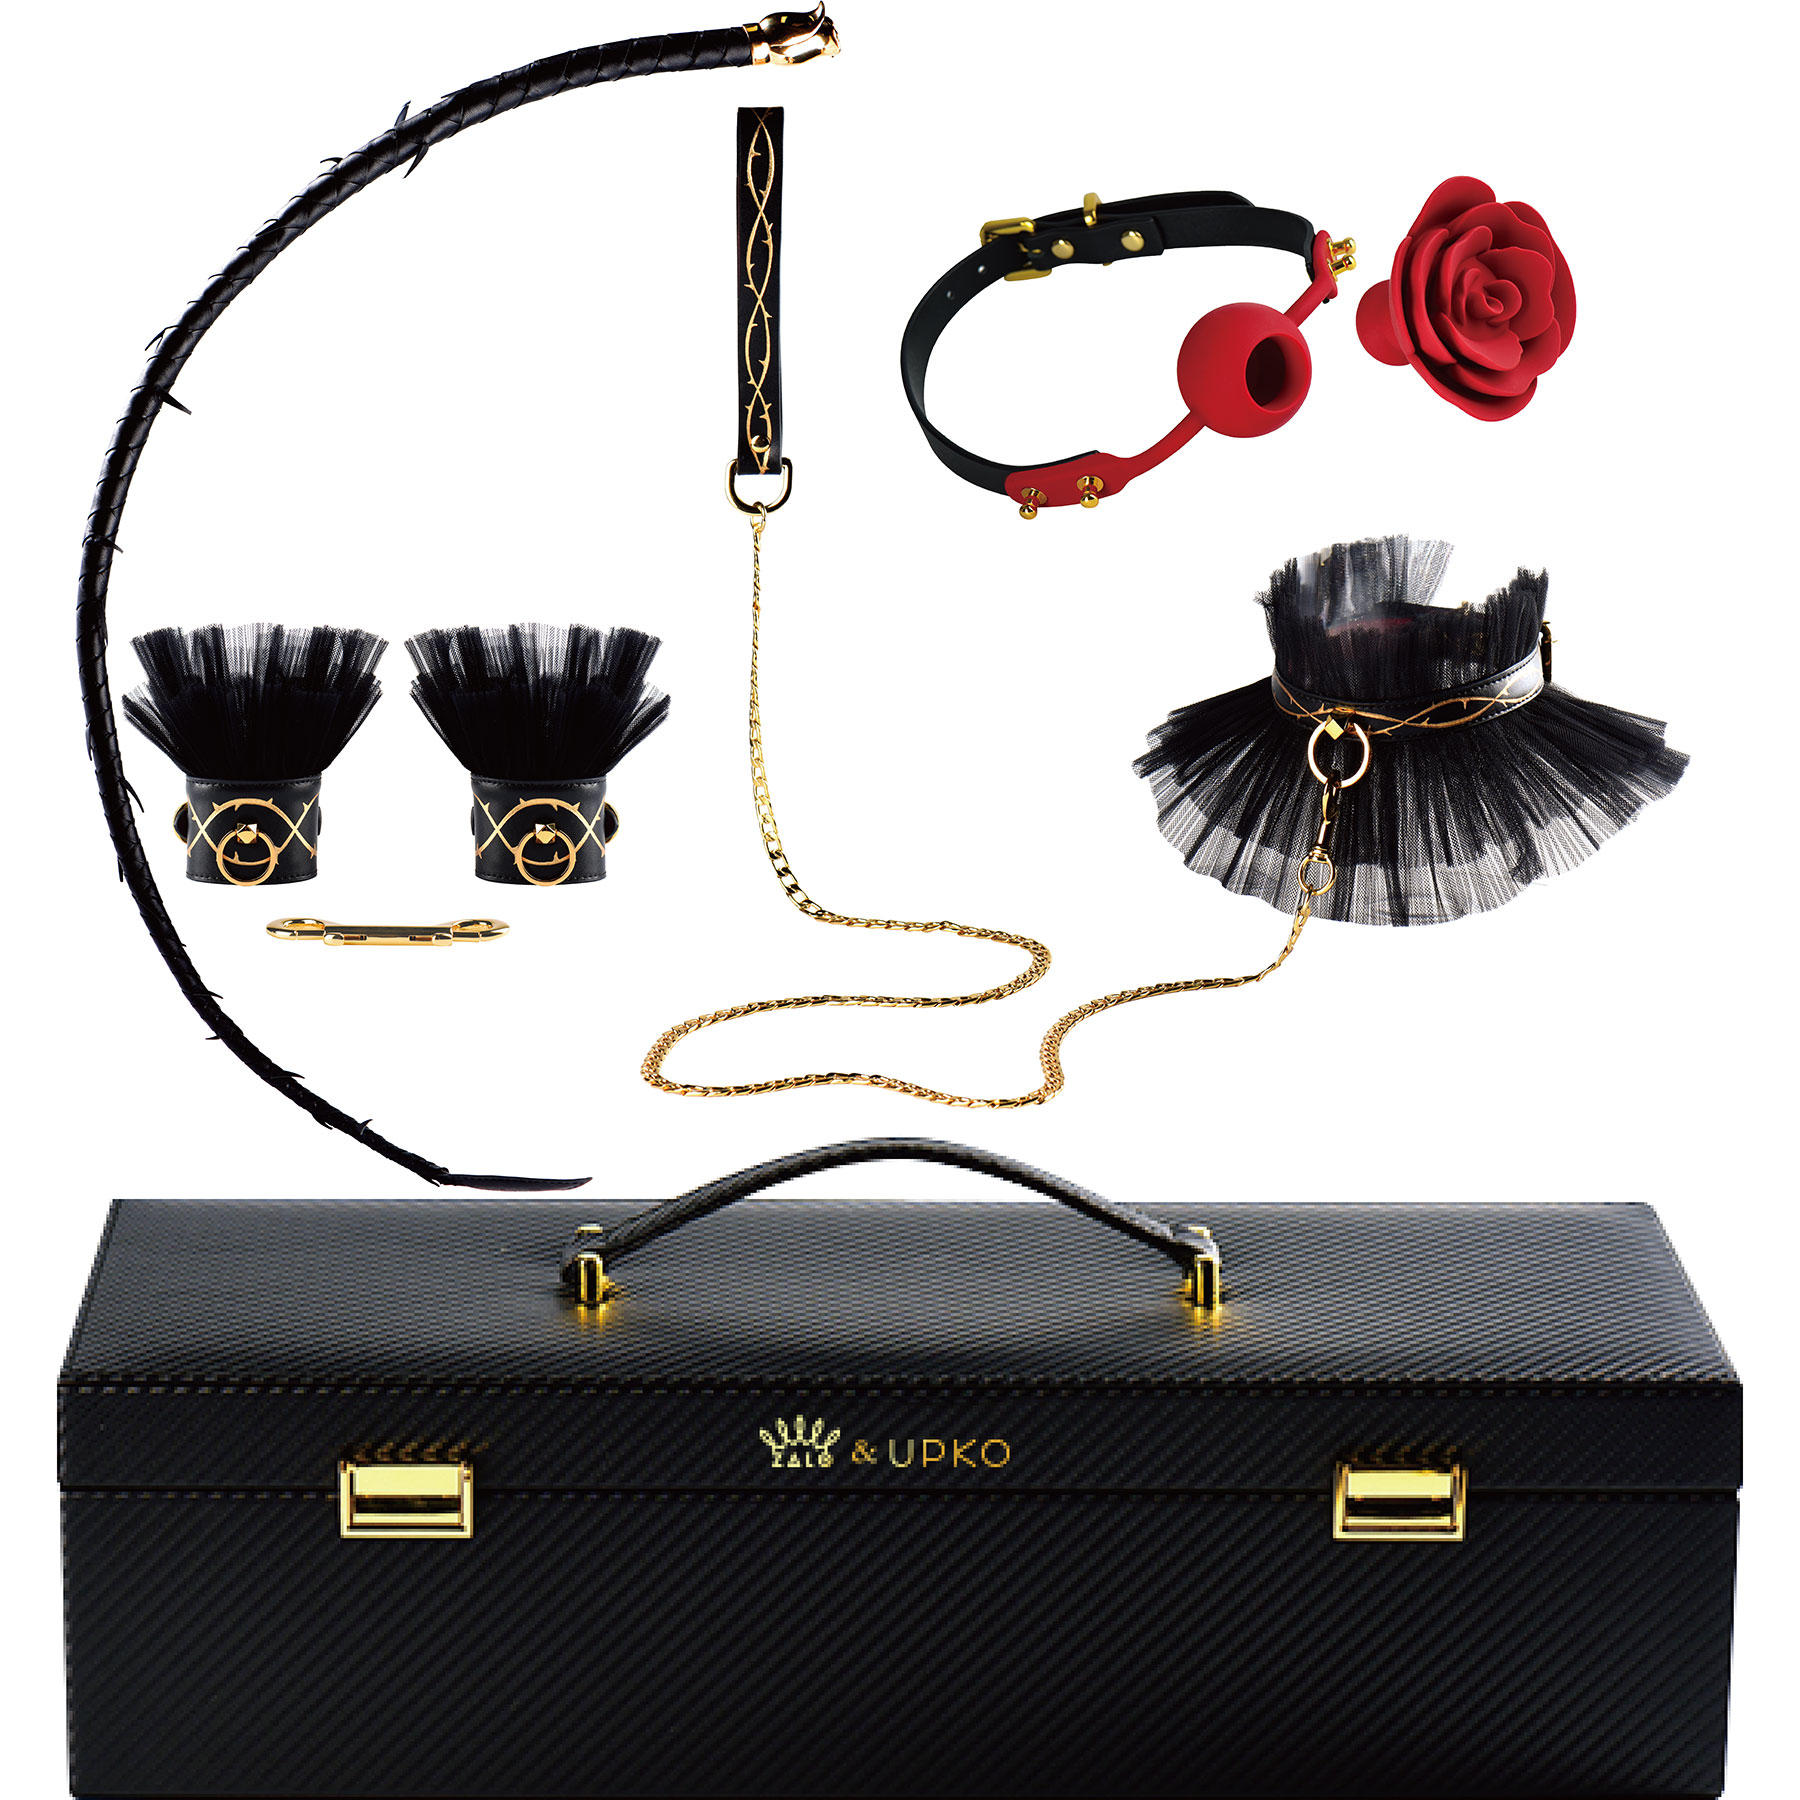 ZALO & UPKO Doll Designer Collection Luxurious & Romantic Bondage Play Kit